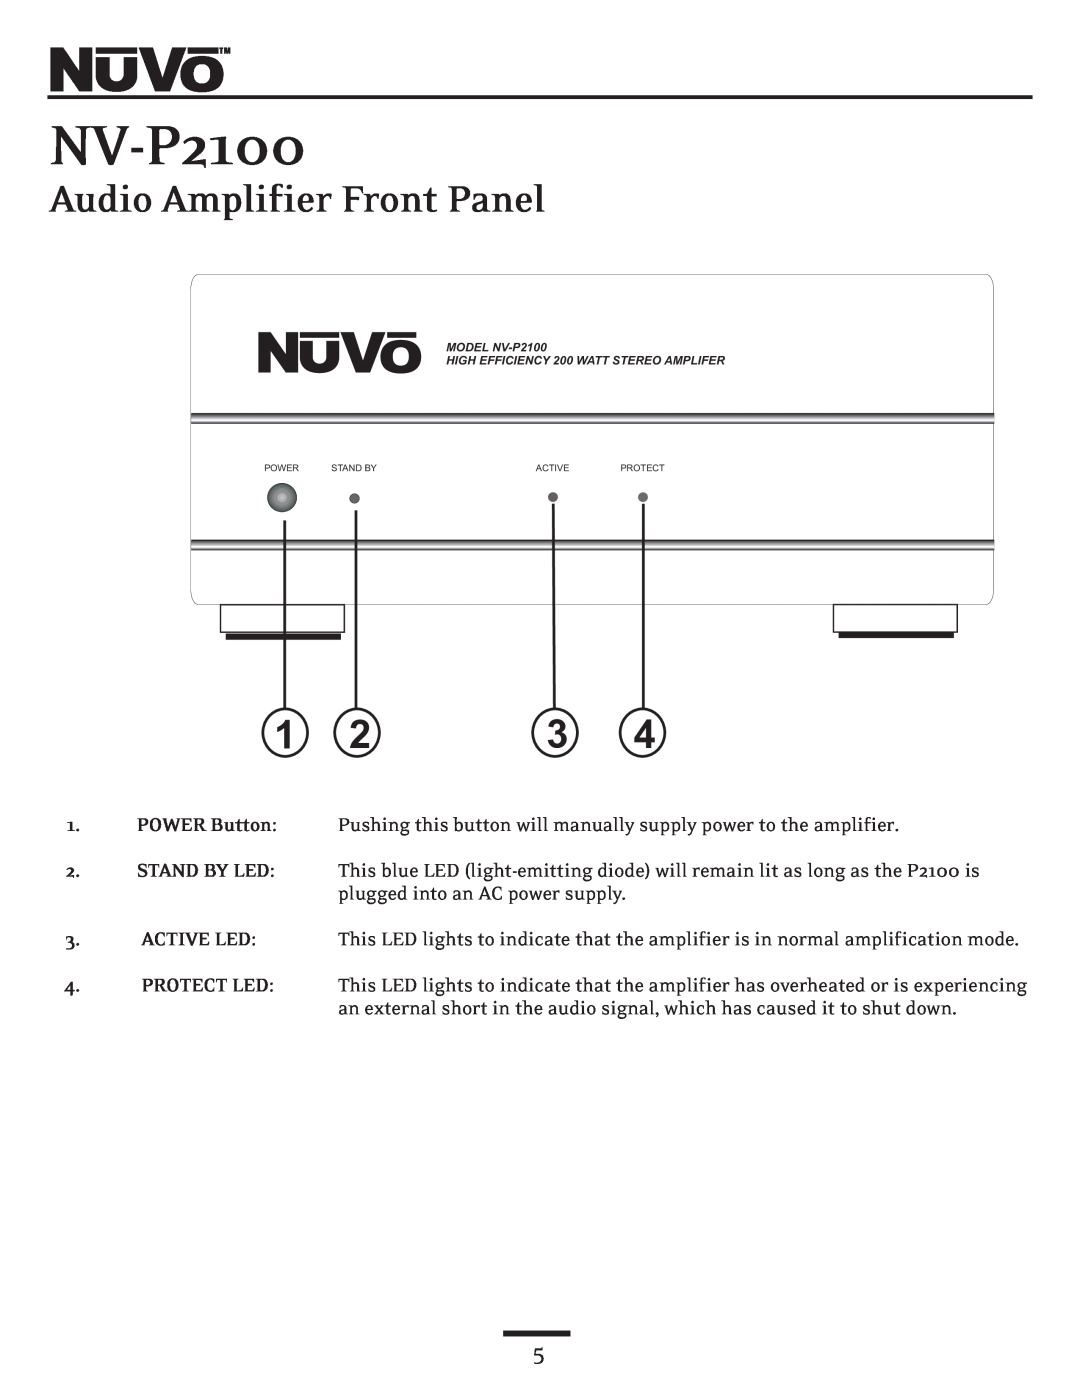 Nuvo owner manual Audio Amplifier Front Panel, MODEL NV-P2100, HIGH EFFICIENCY 200 WATT STEREO AMPLIFER 